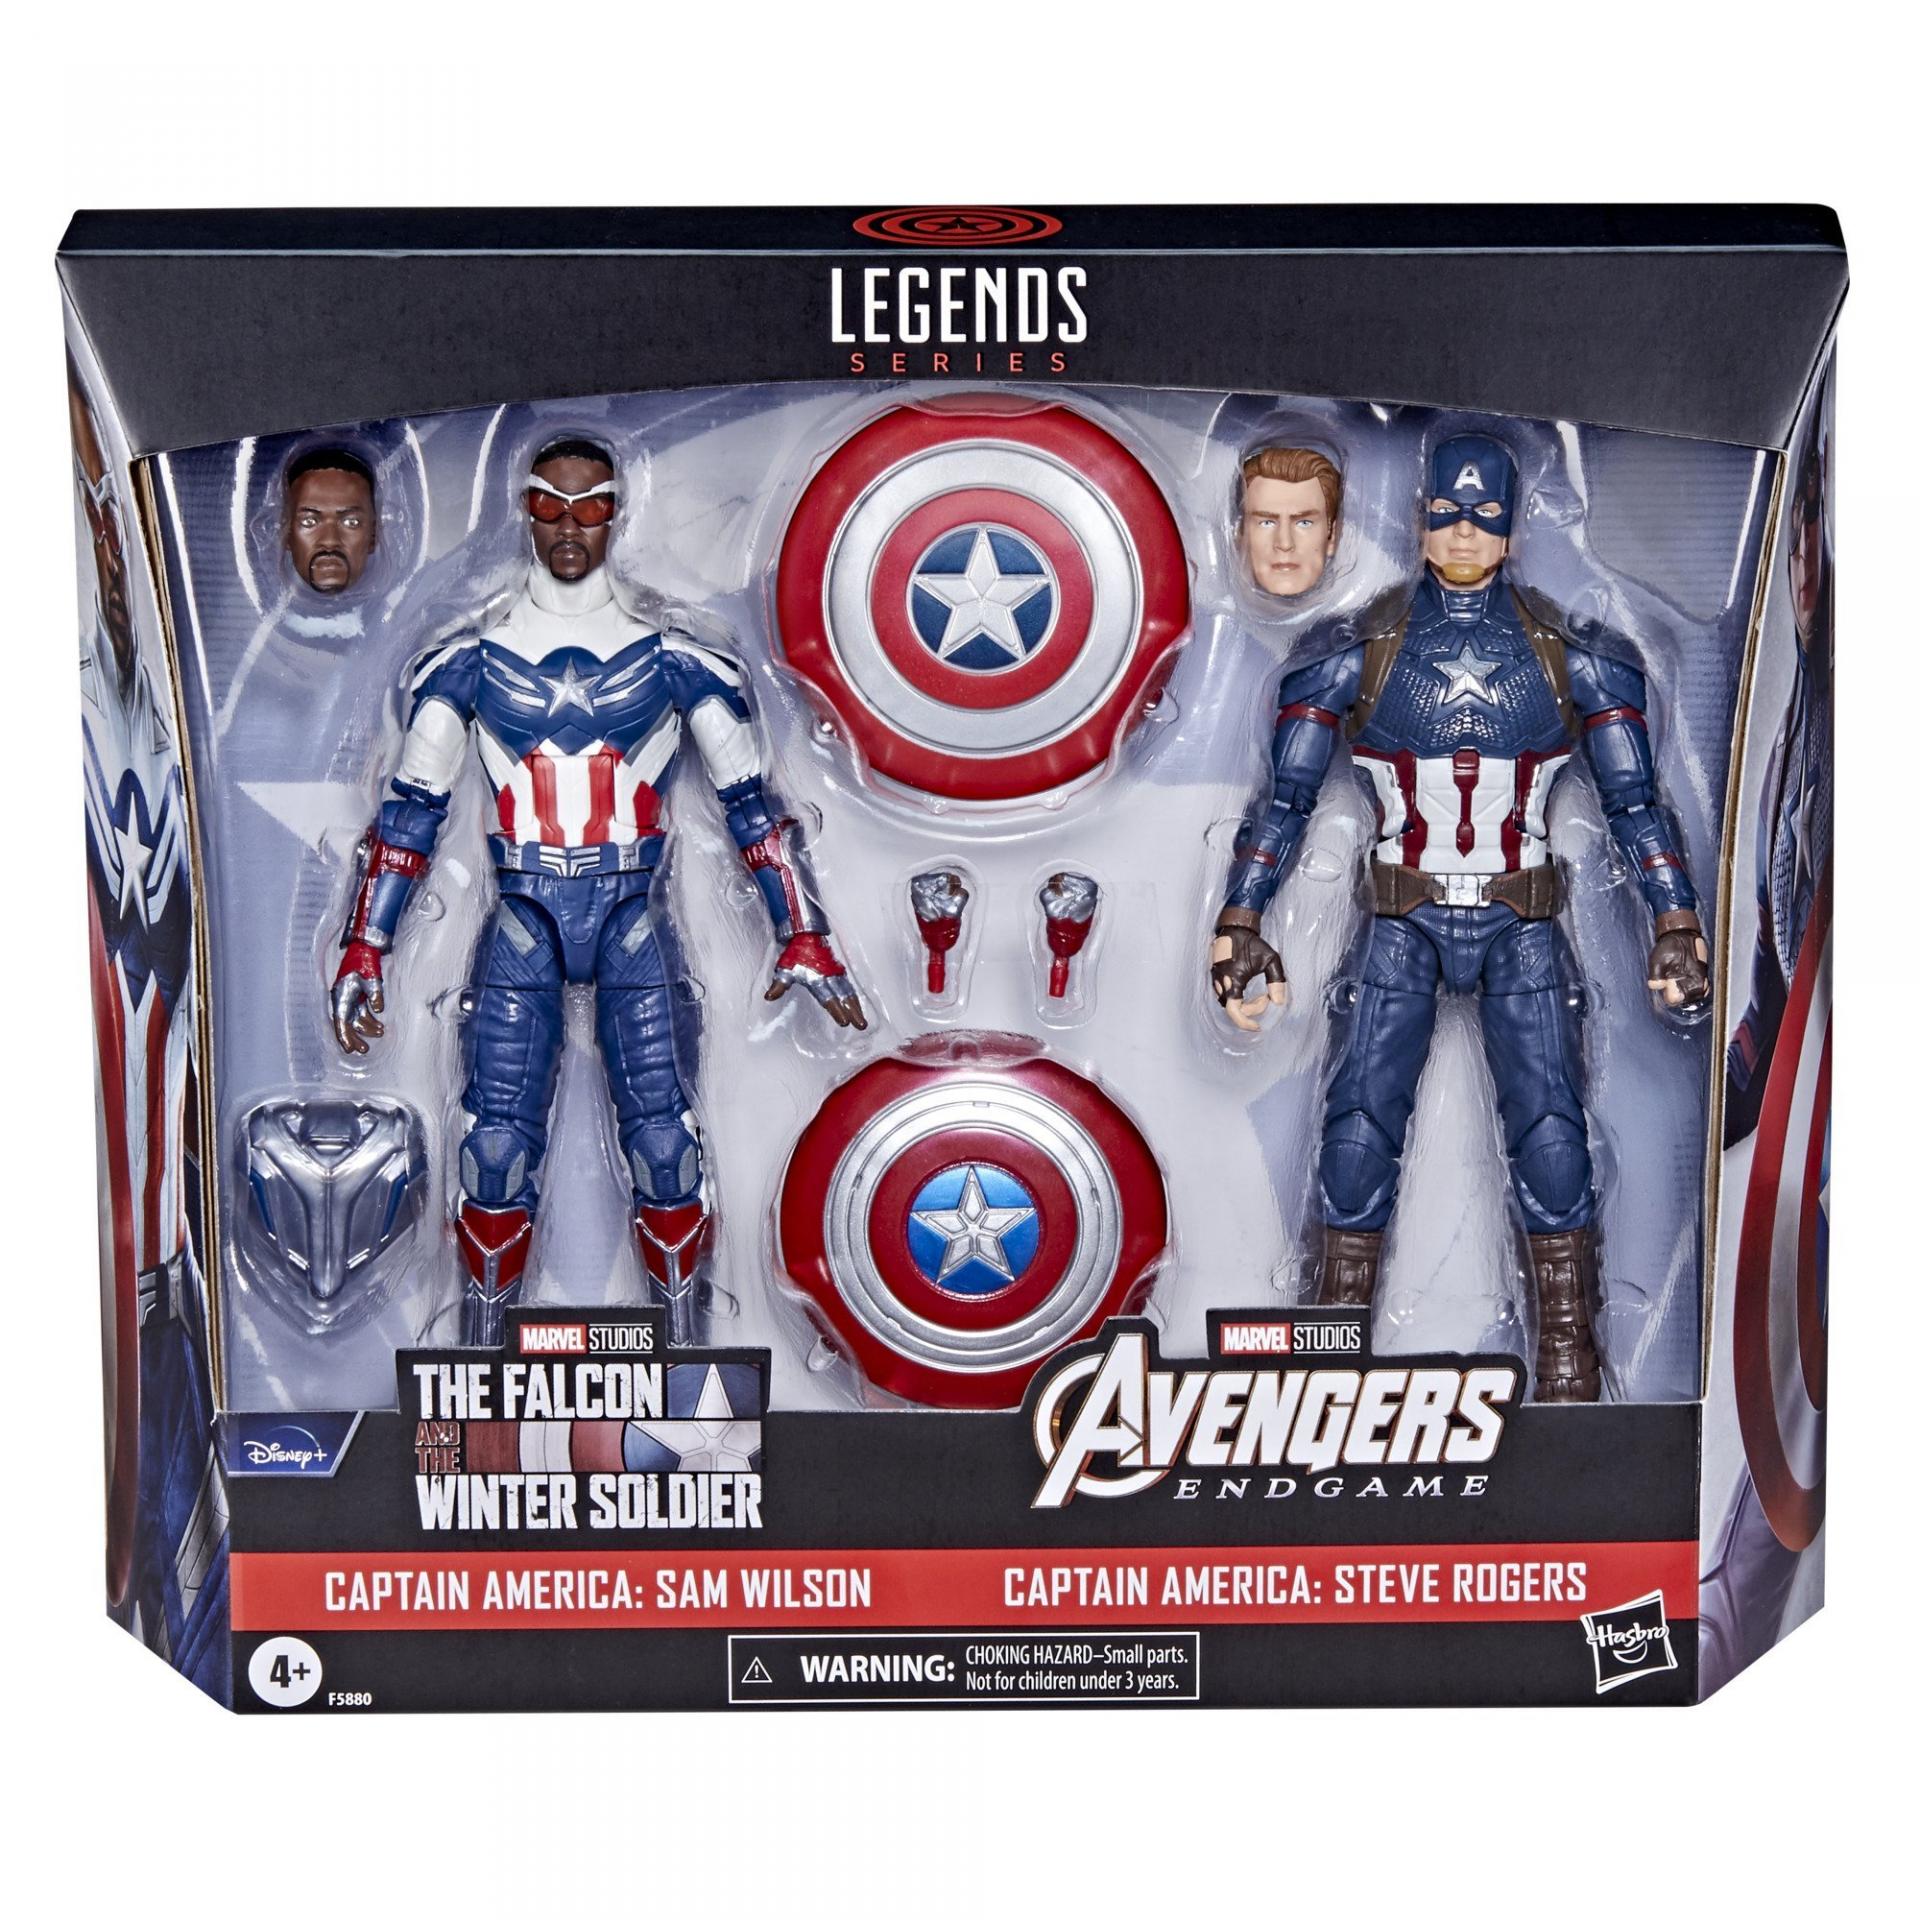 Marvel legends series hasbro captain america 2 pack5